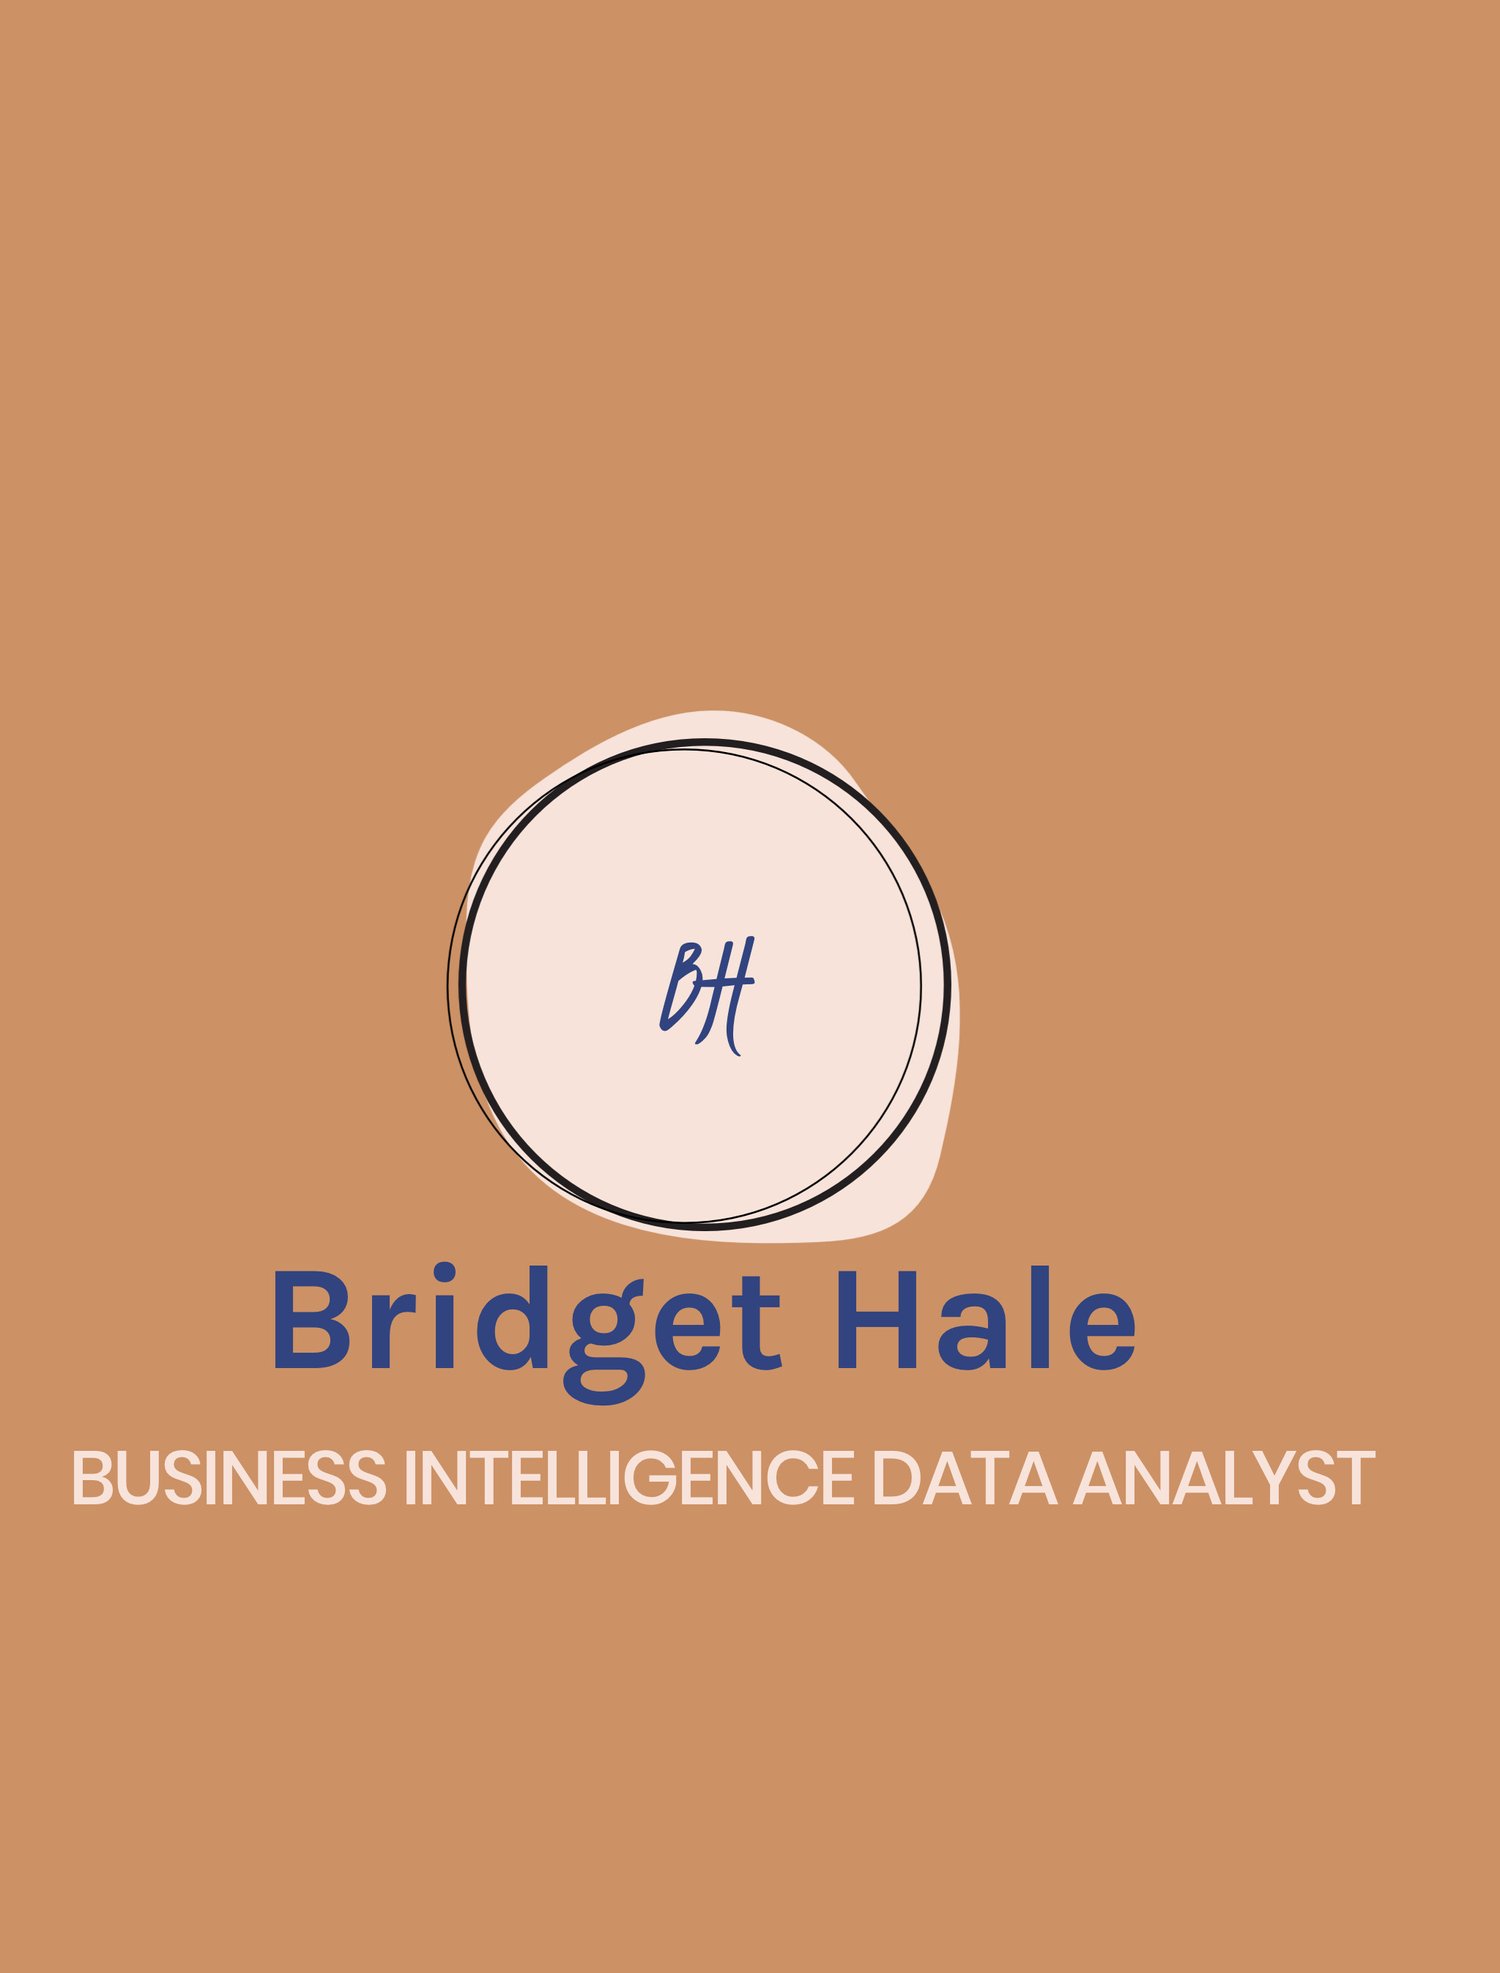 Business Intelligence Data Analyst